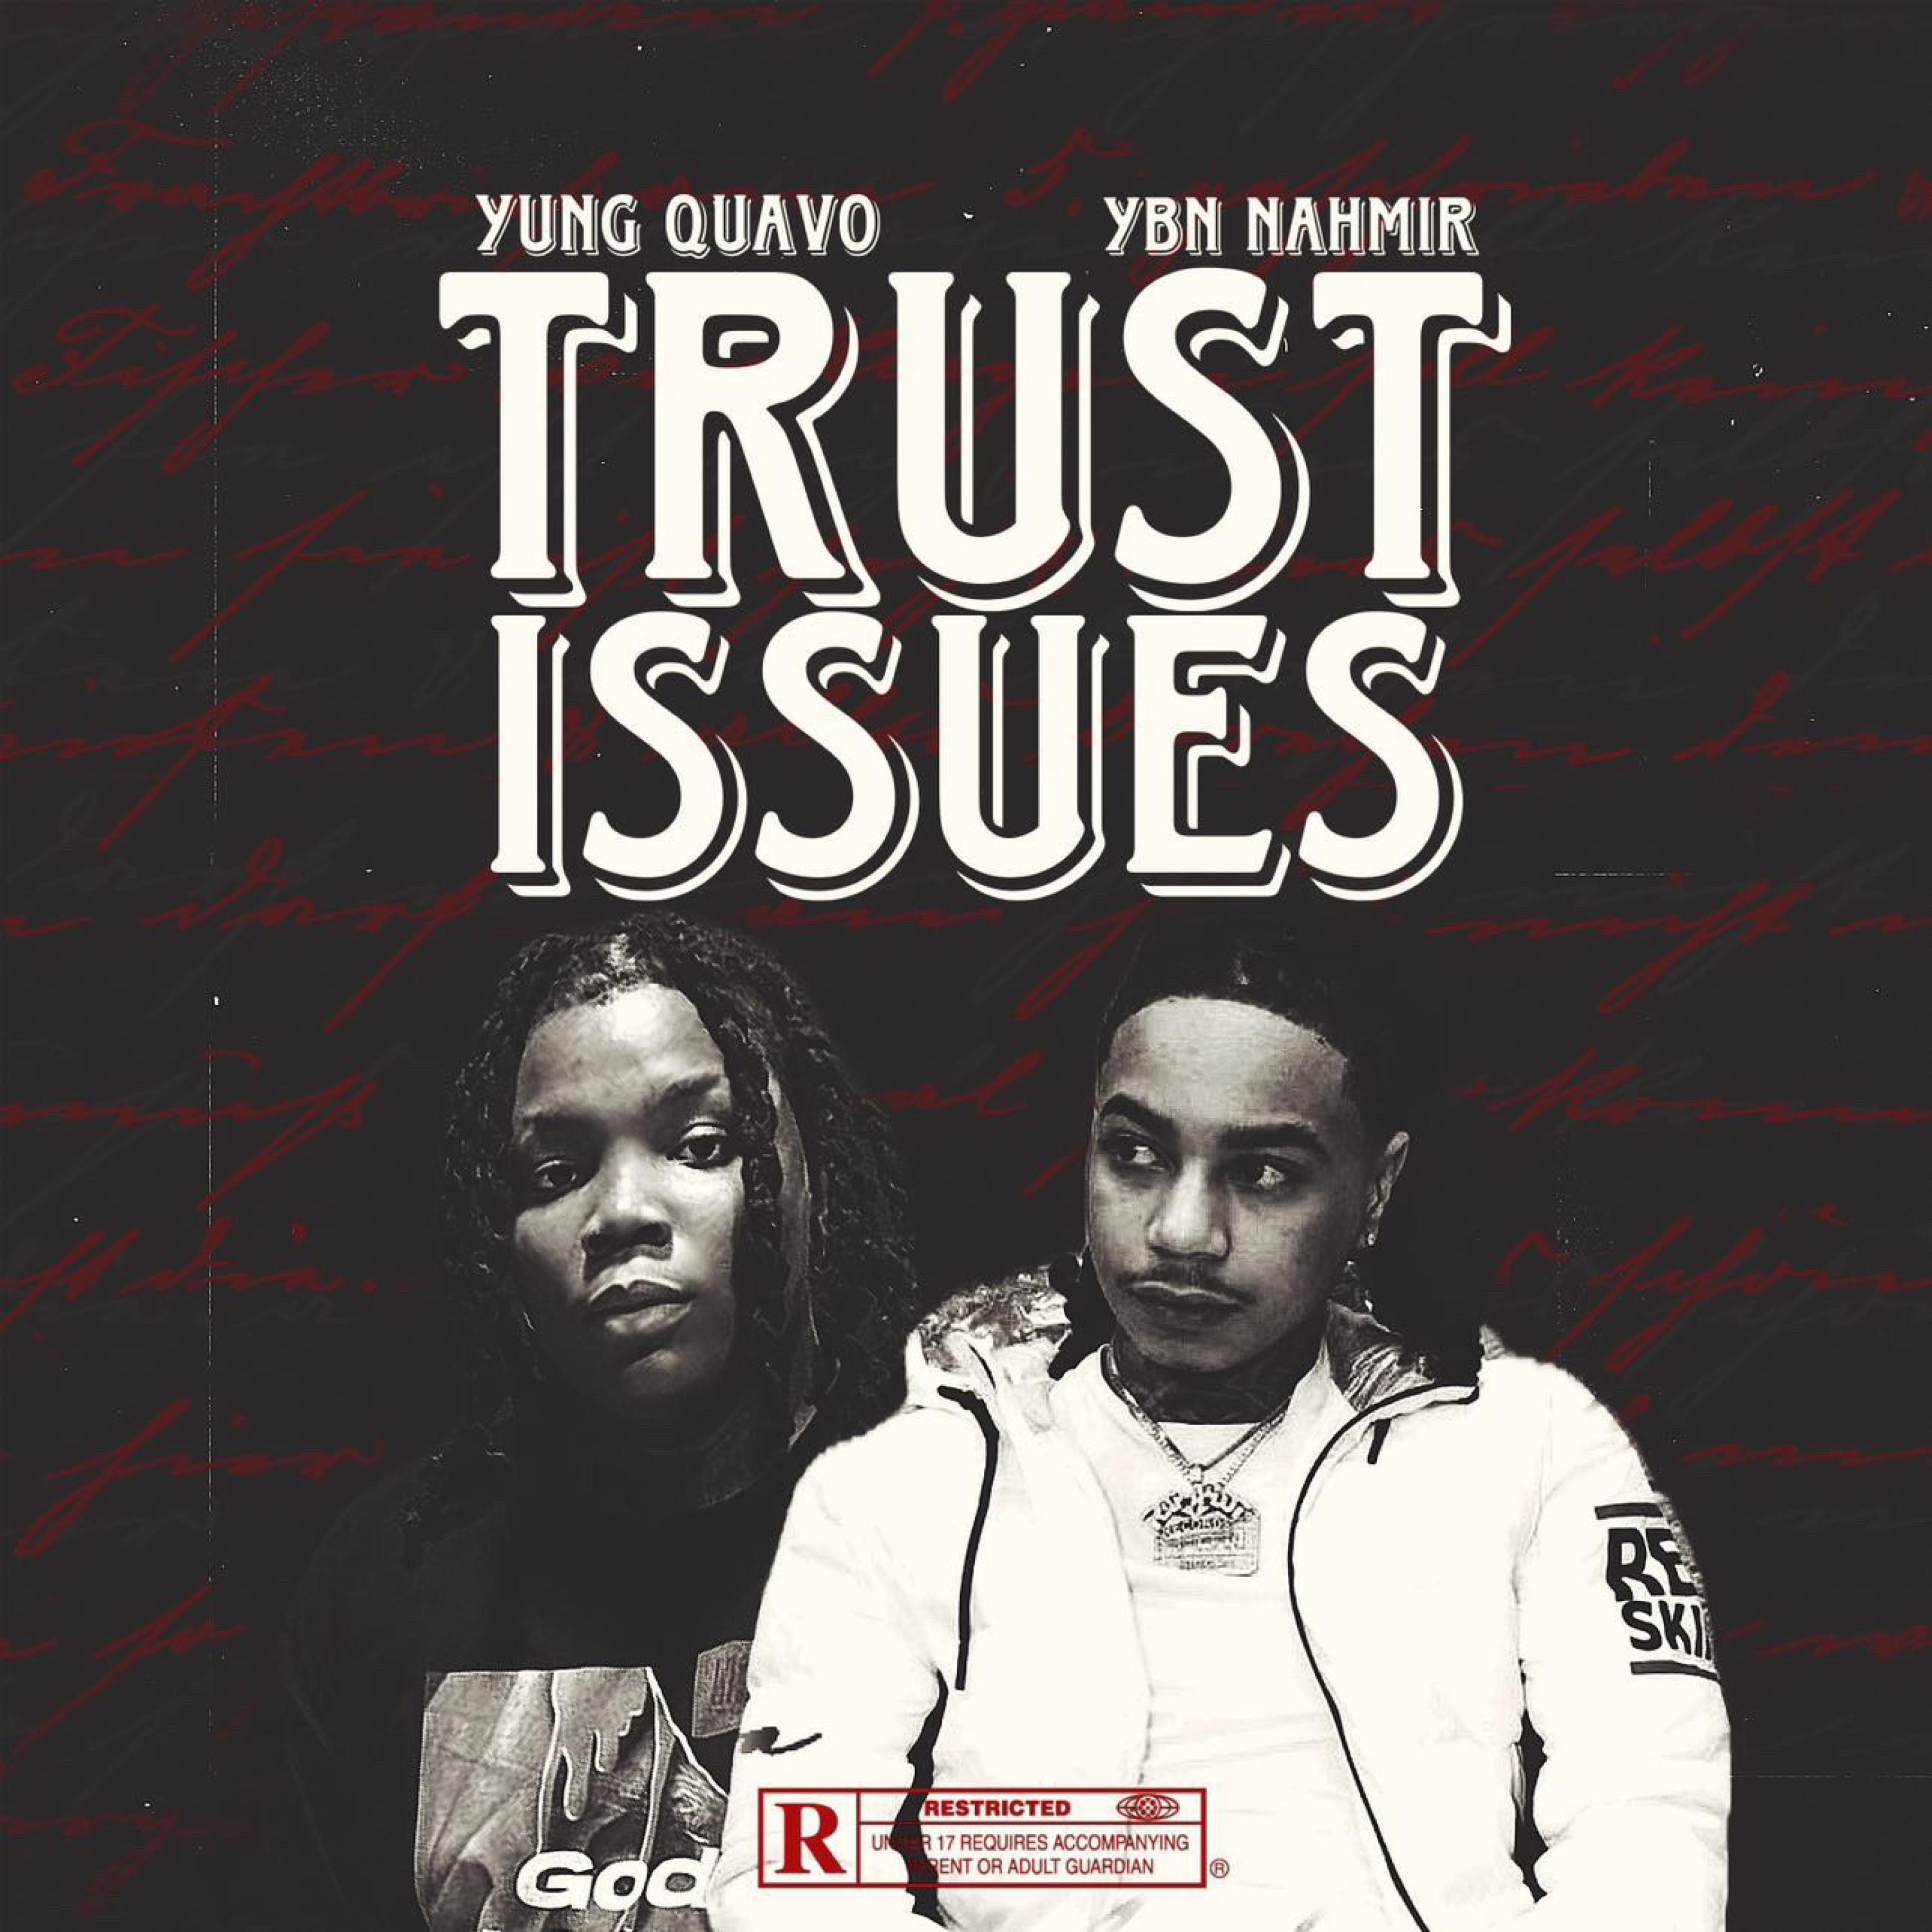 Yung Quavo - Trust Issues (feat. YBN Nahmir)